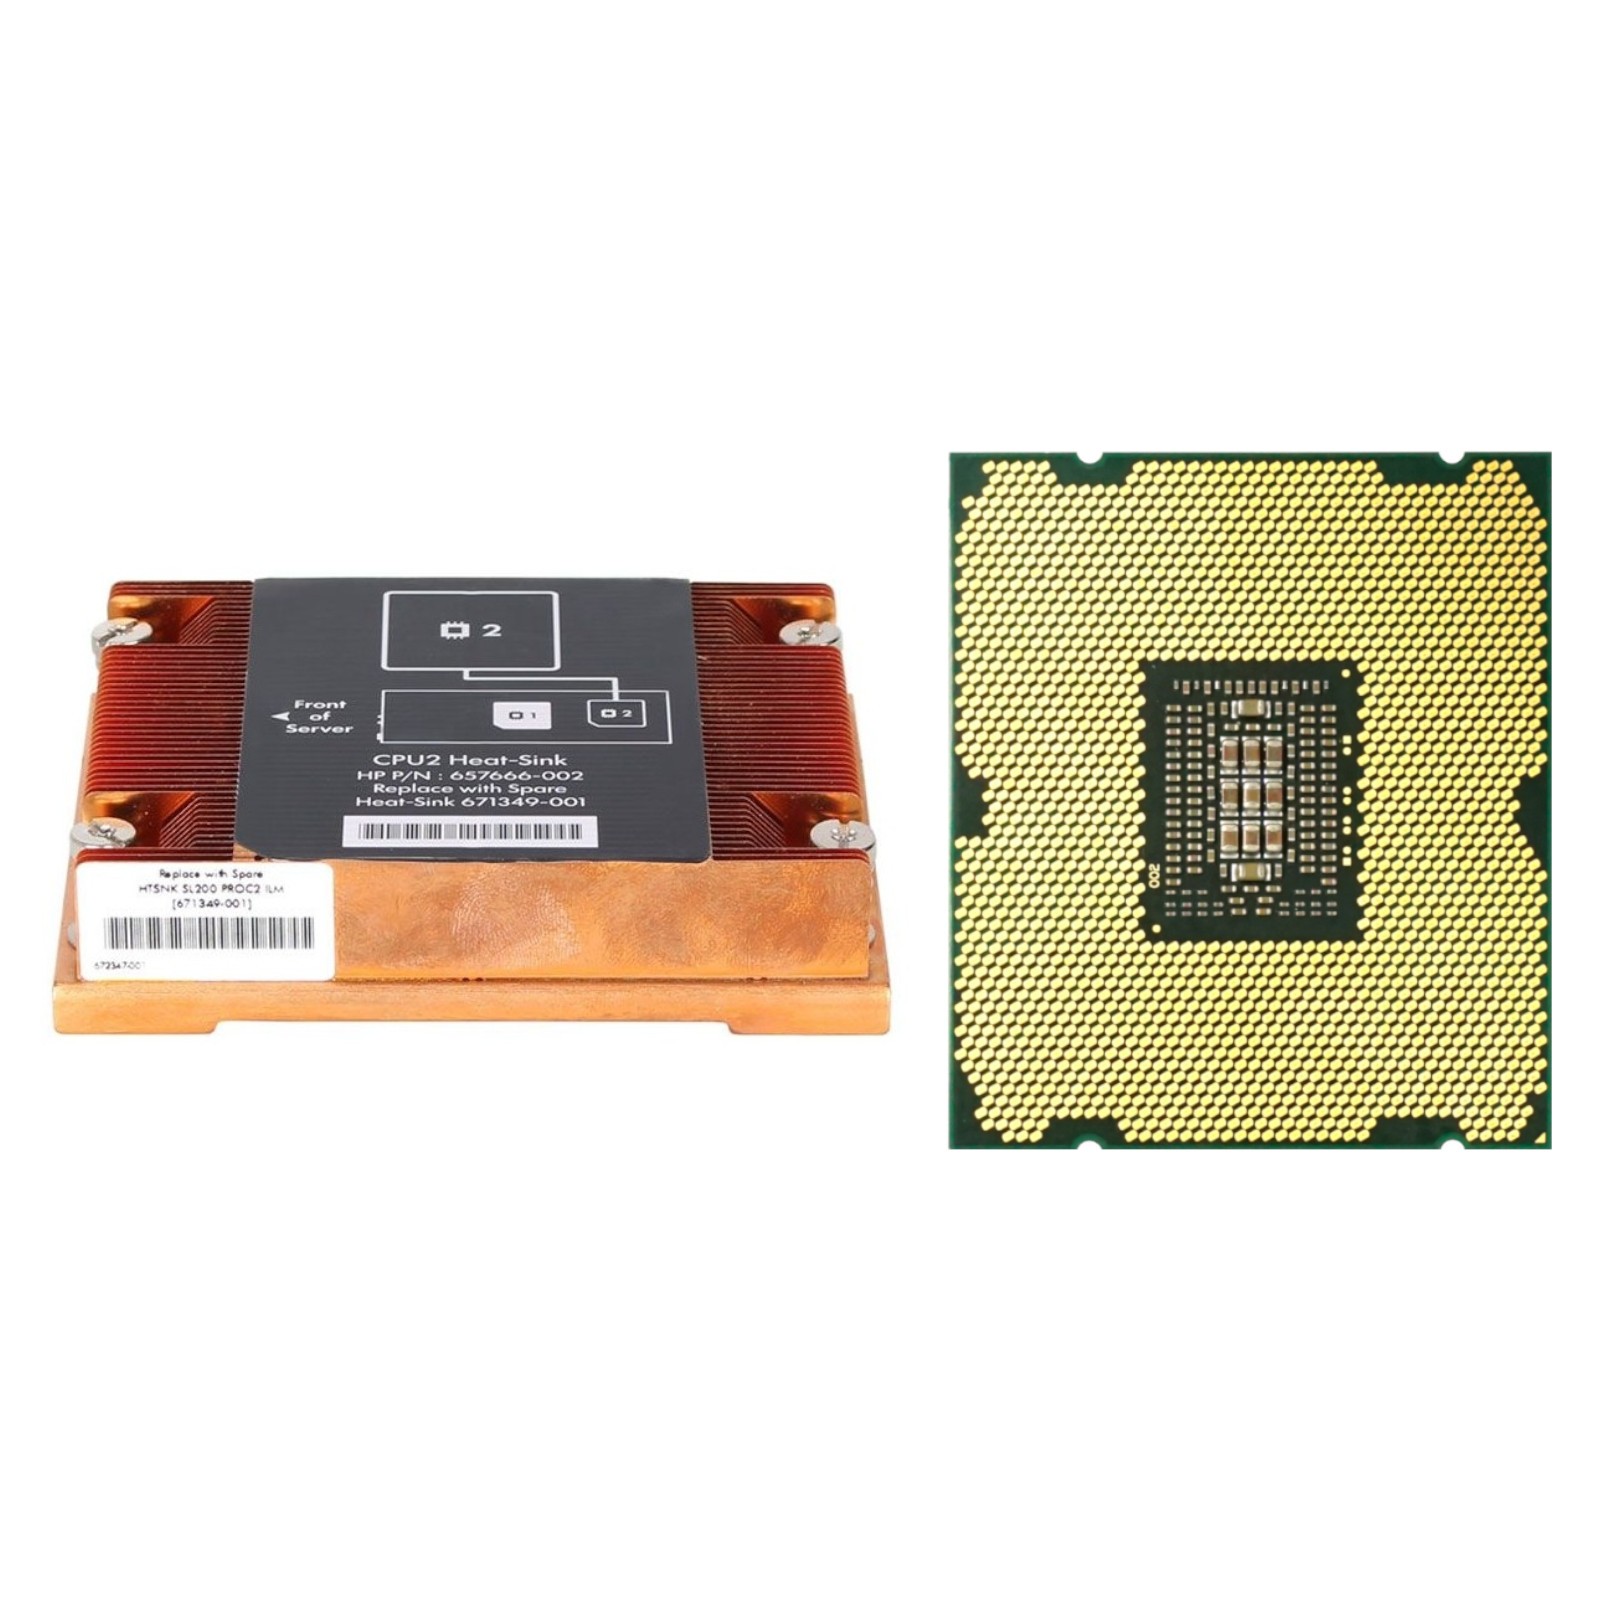 HP (662325-B21) ProLiant SL250S G8 - Intel Xeon E5-2620 CPU2 Kit